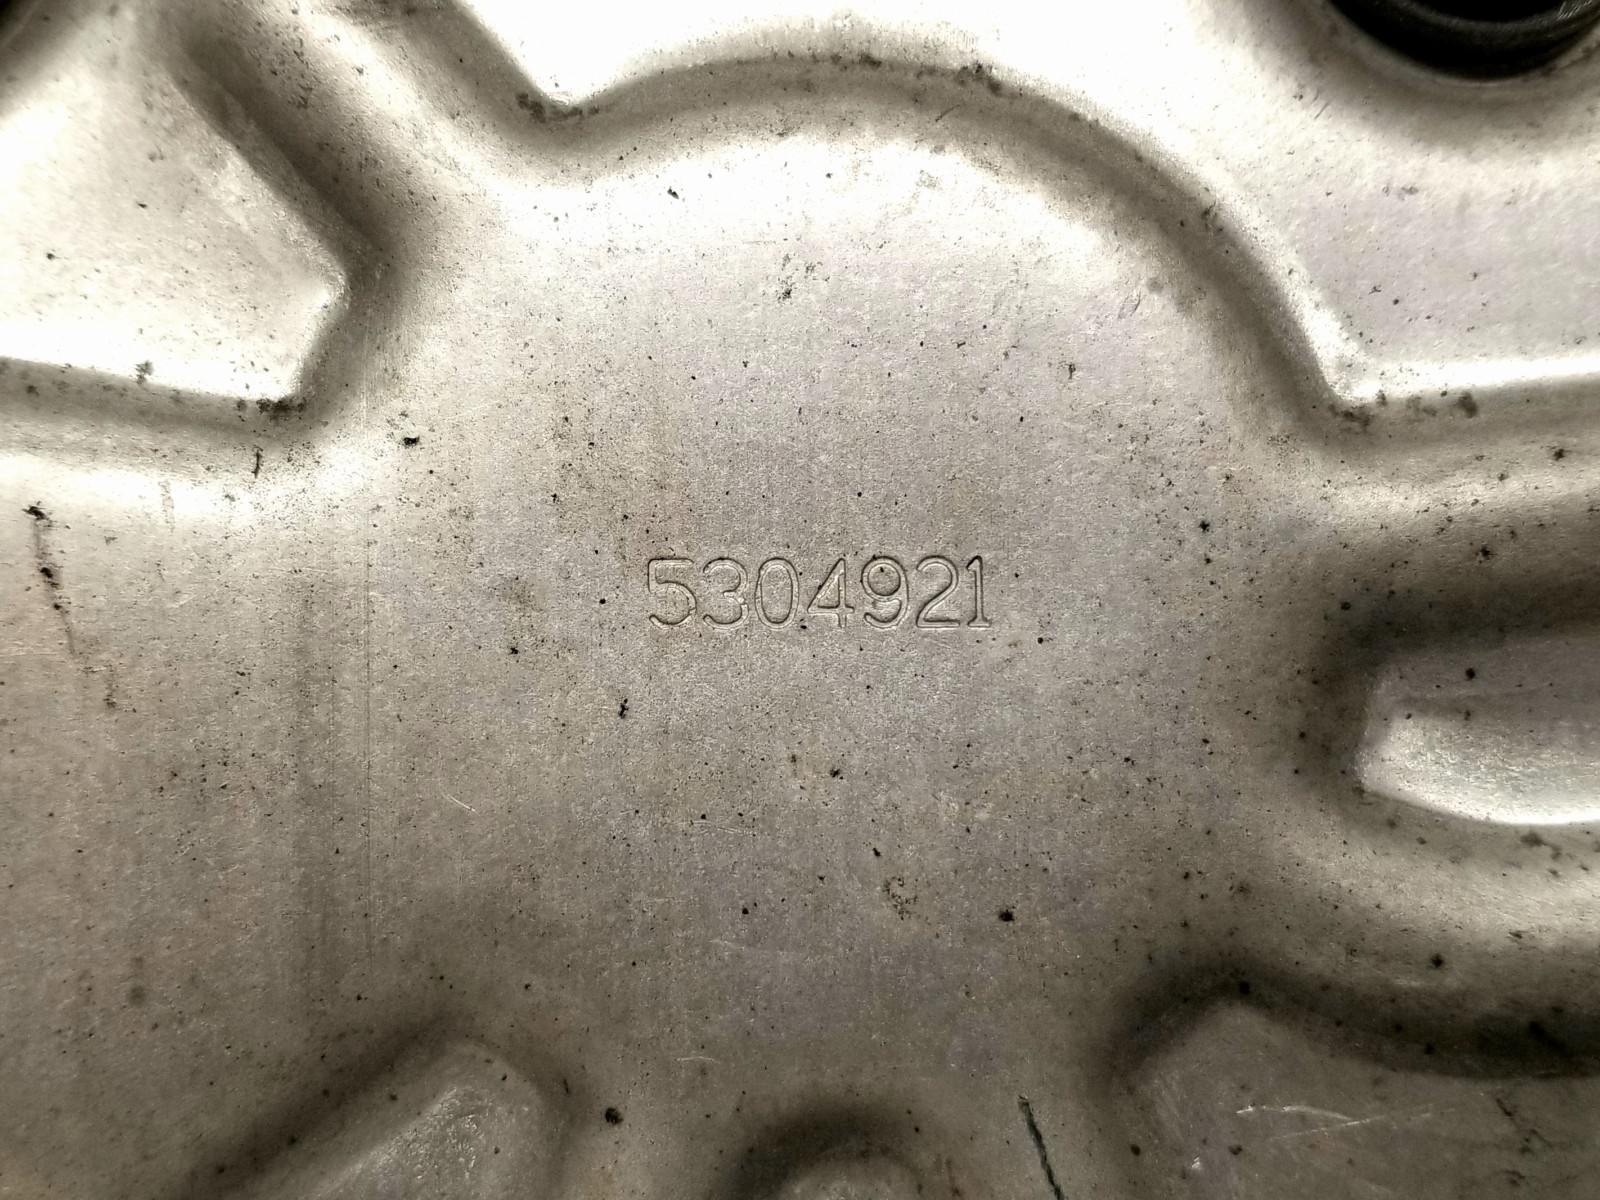 Cummins 6.7l Engine Ecm Backing Plate Mounting Bracket 5304921 B